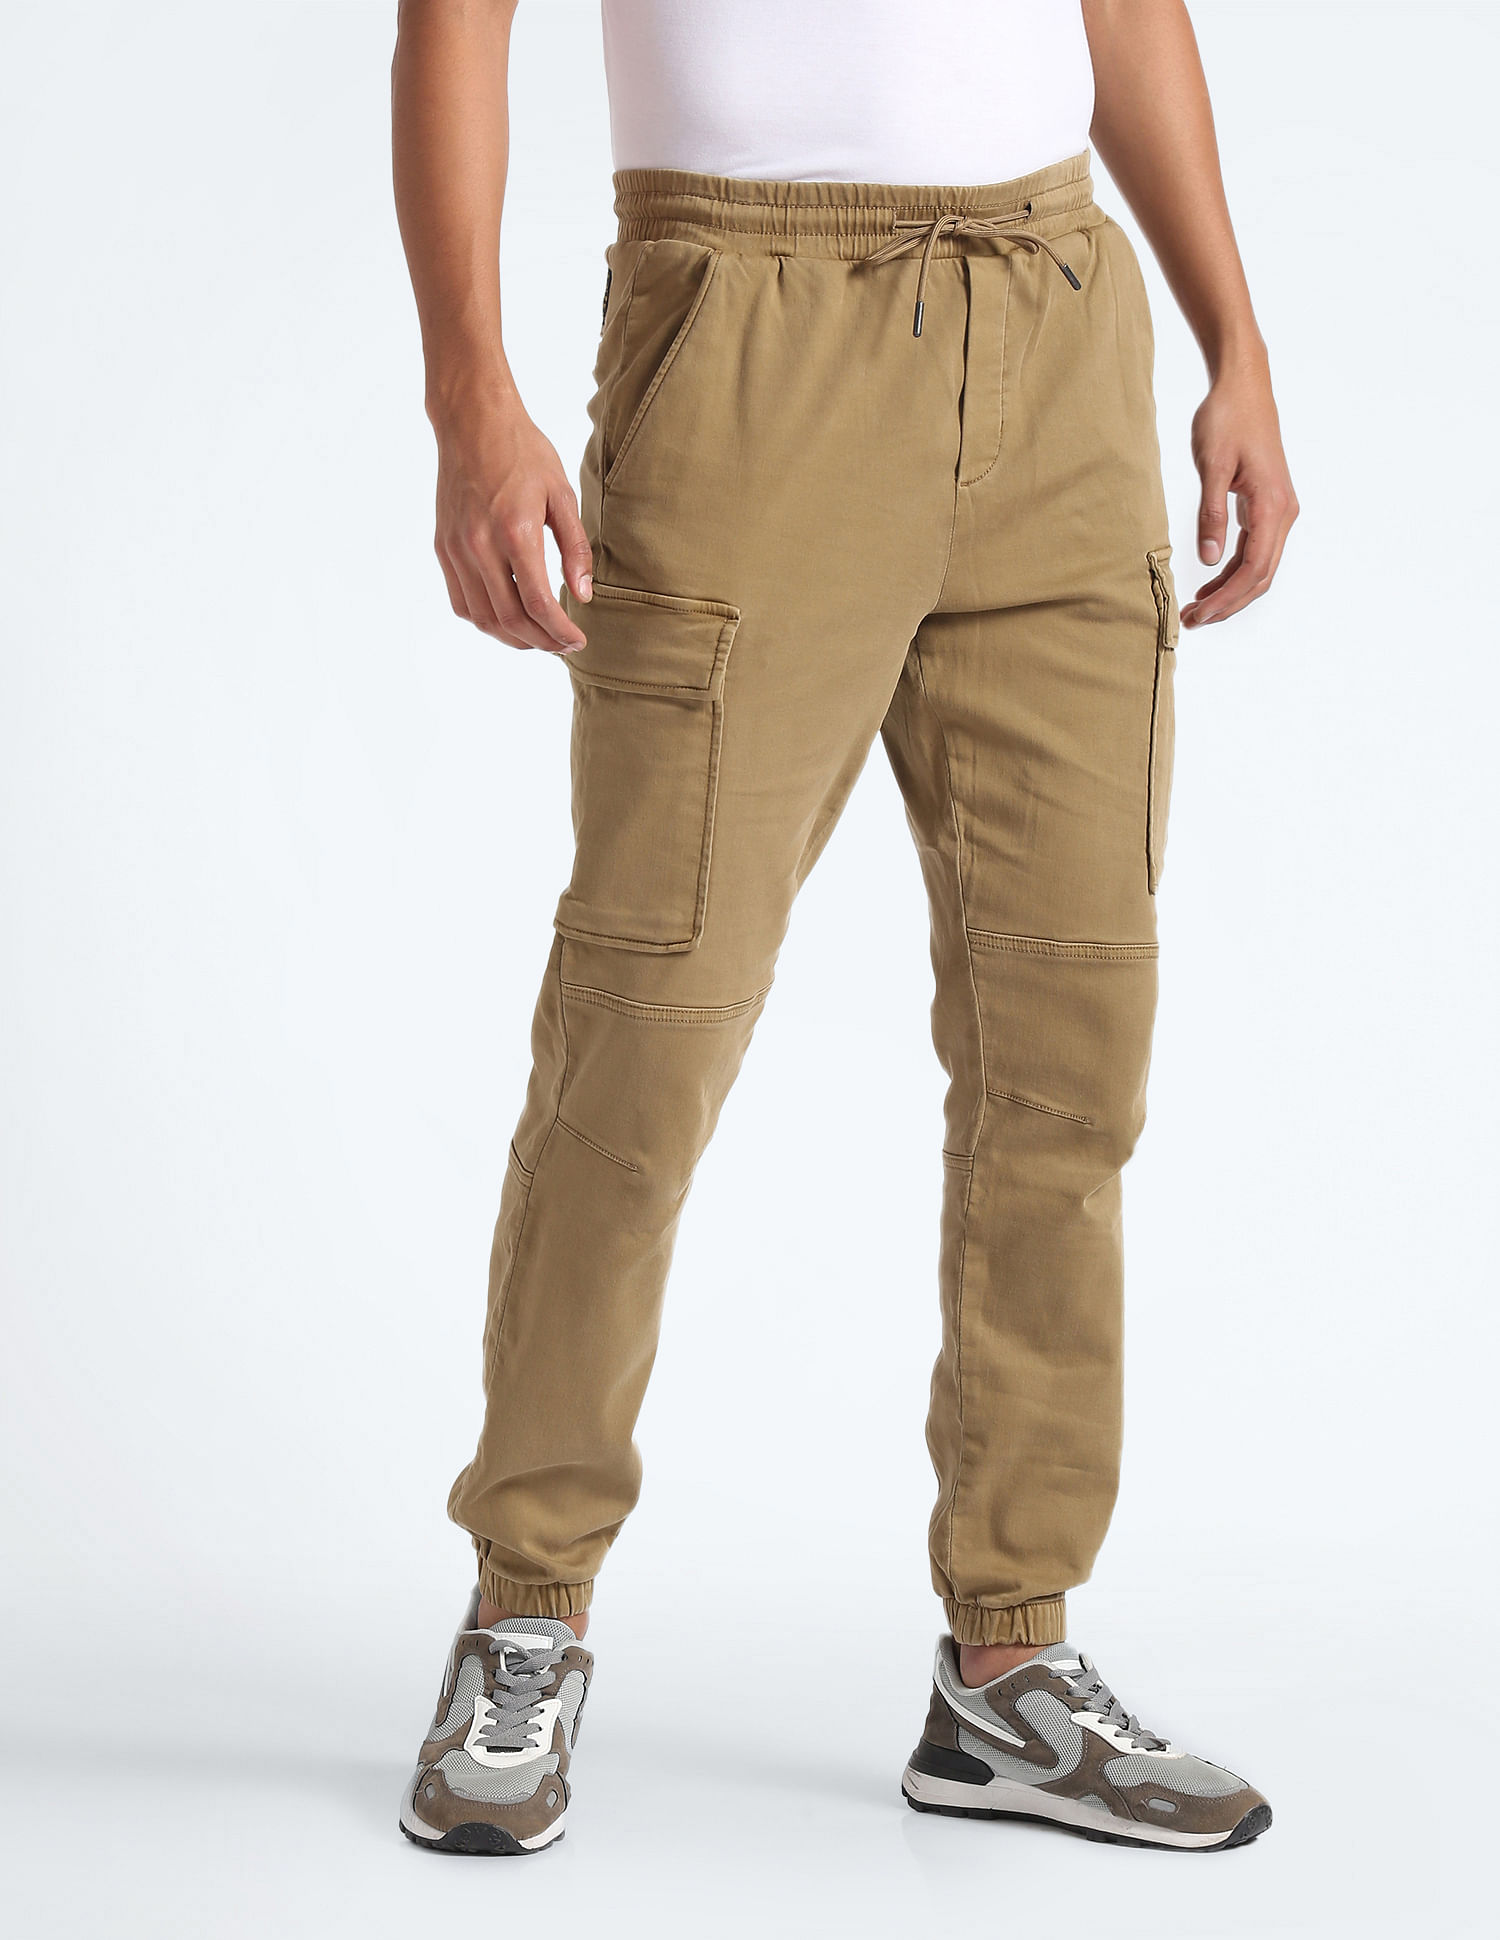 Buy Warburg Men's Regular Fit Solid Cargo Pants Dark Green at Amazon.in